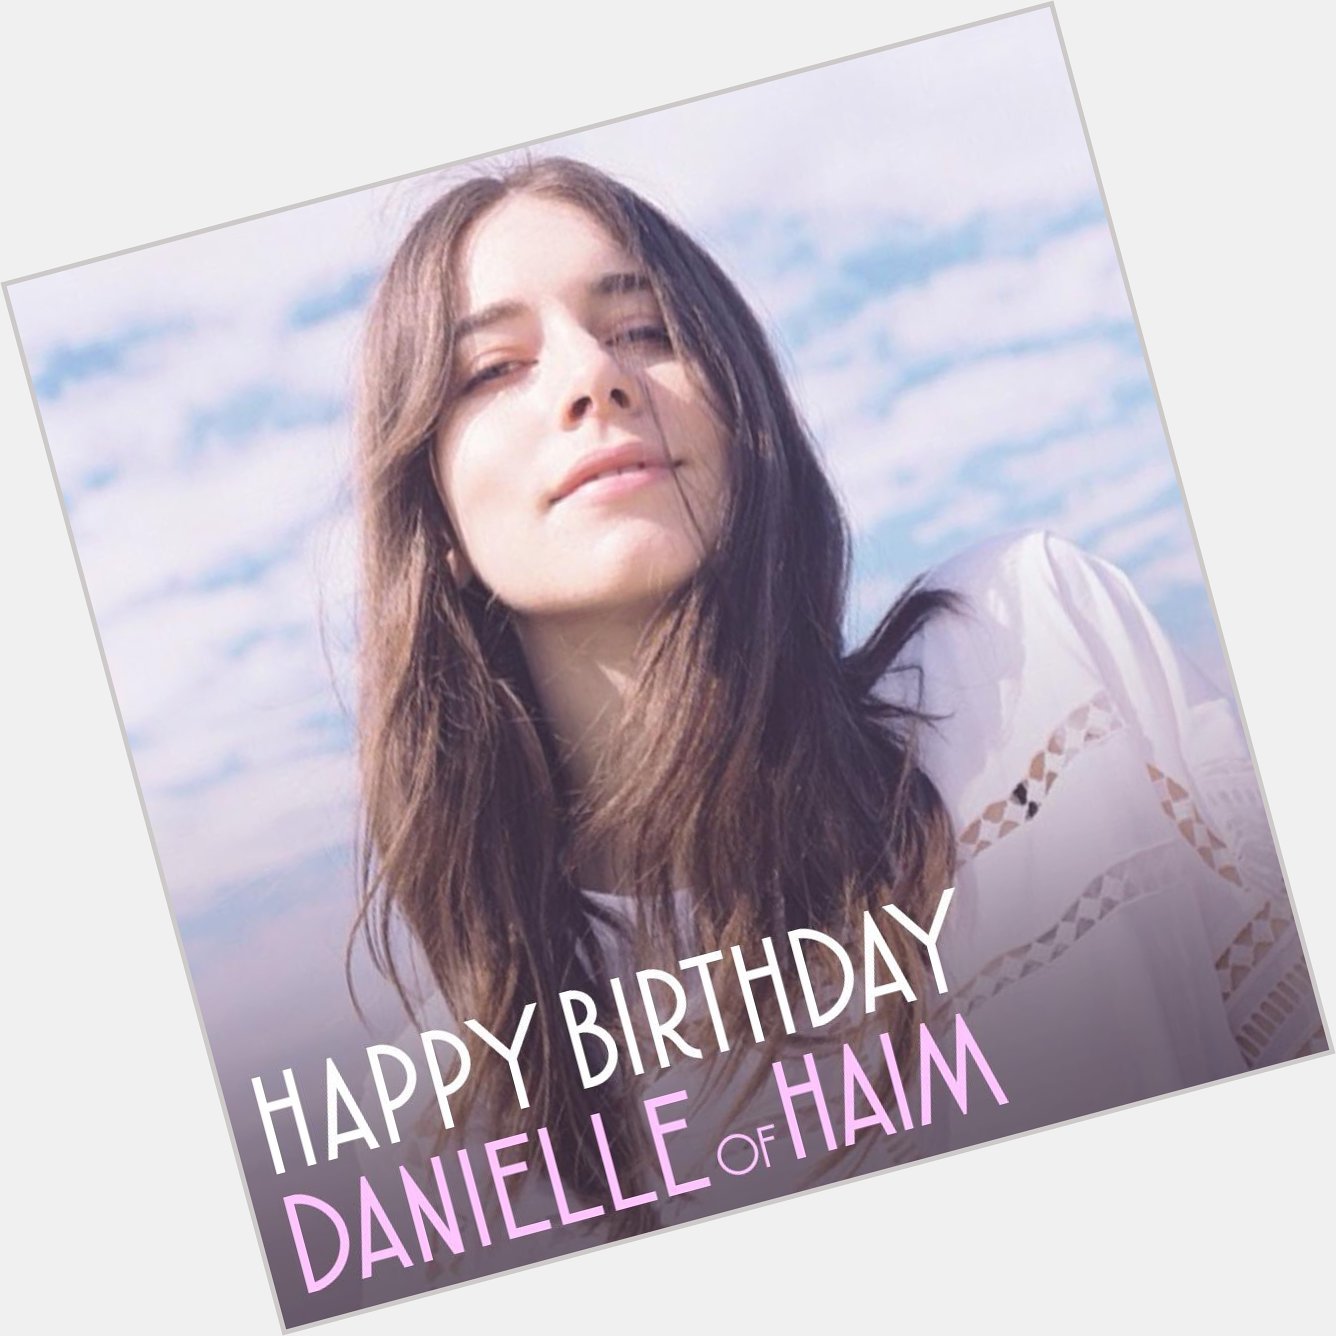 Wishing Danielle Haim of a happy birthday! 